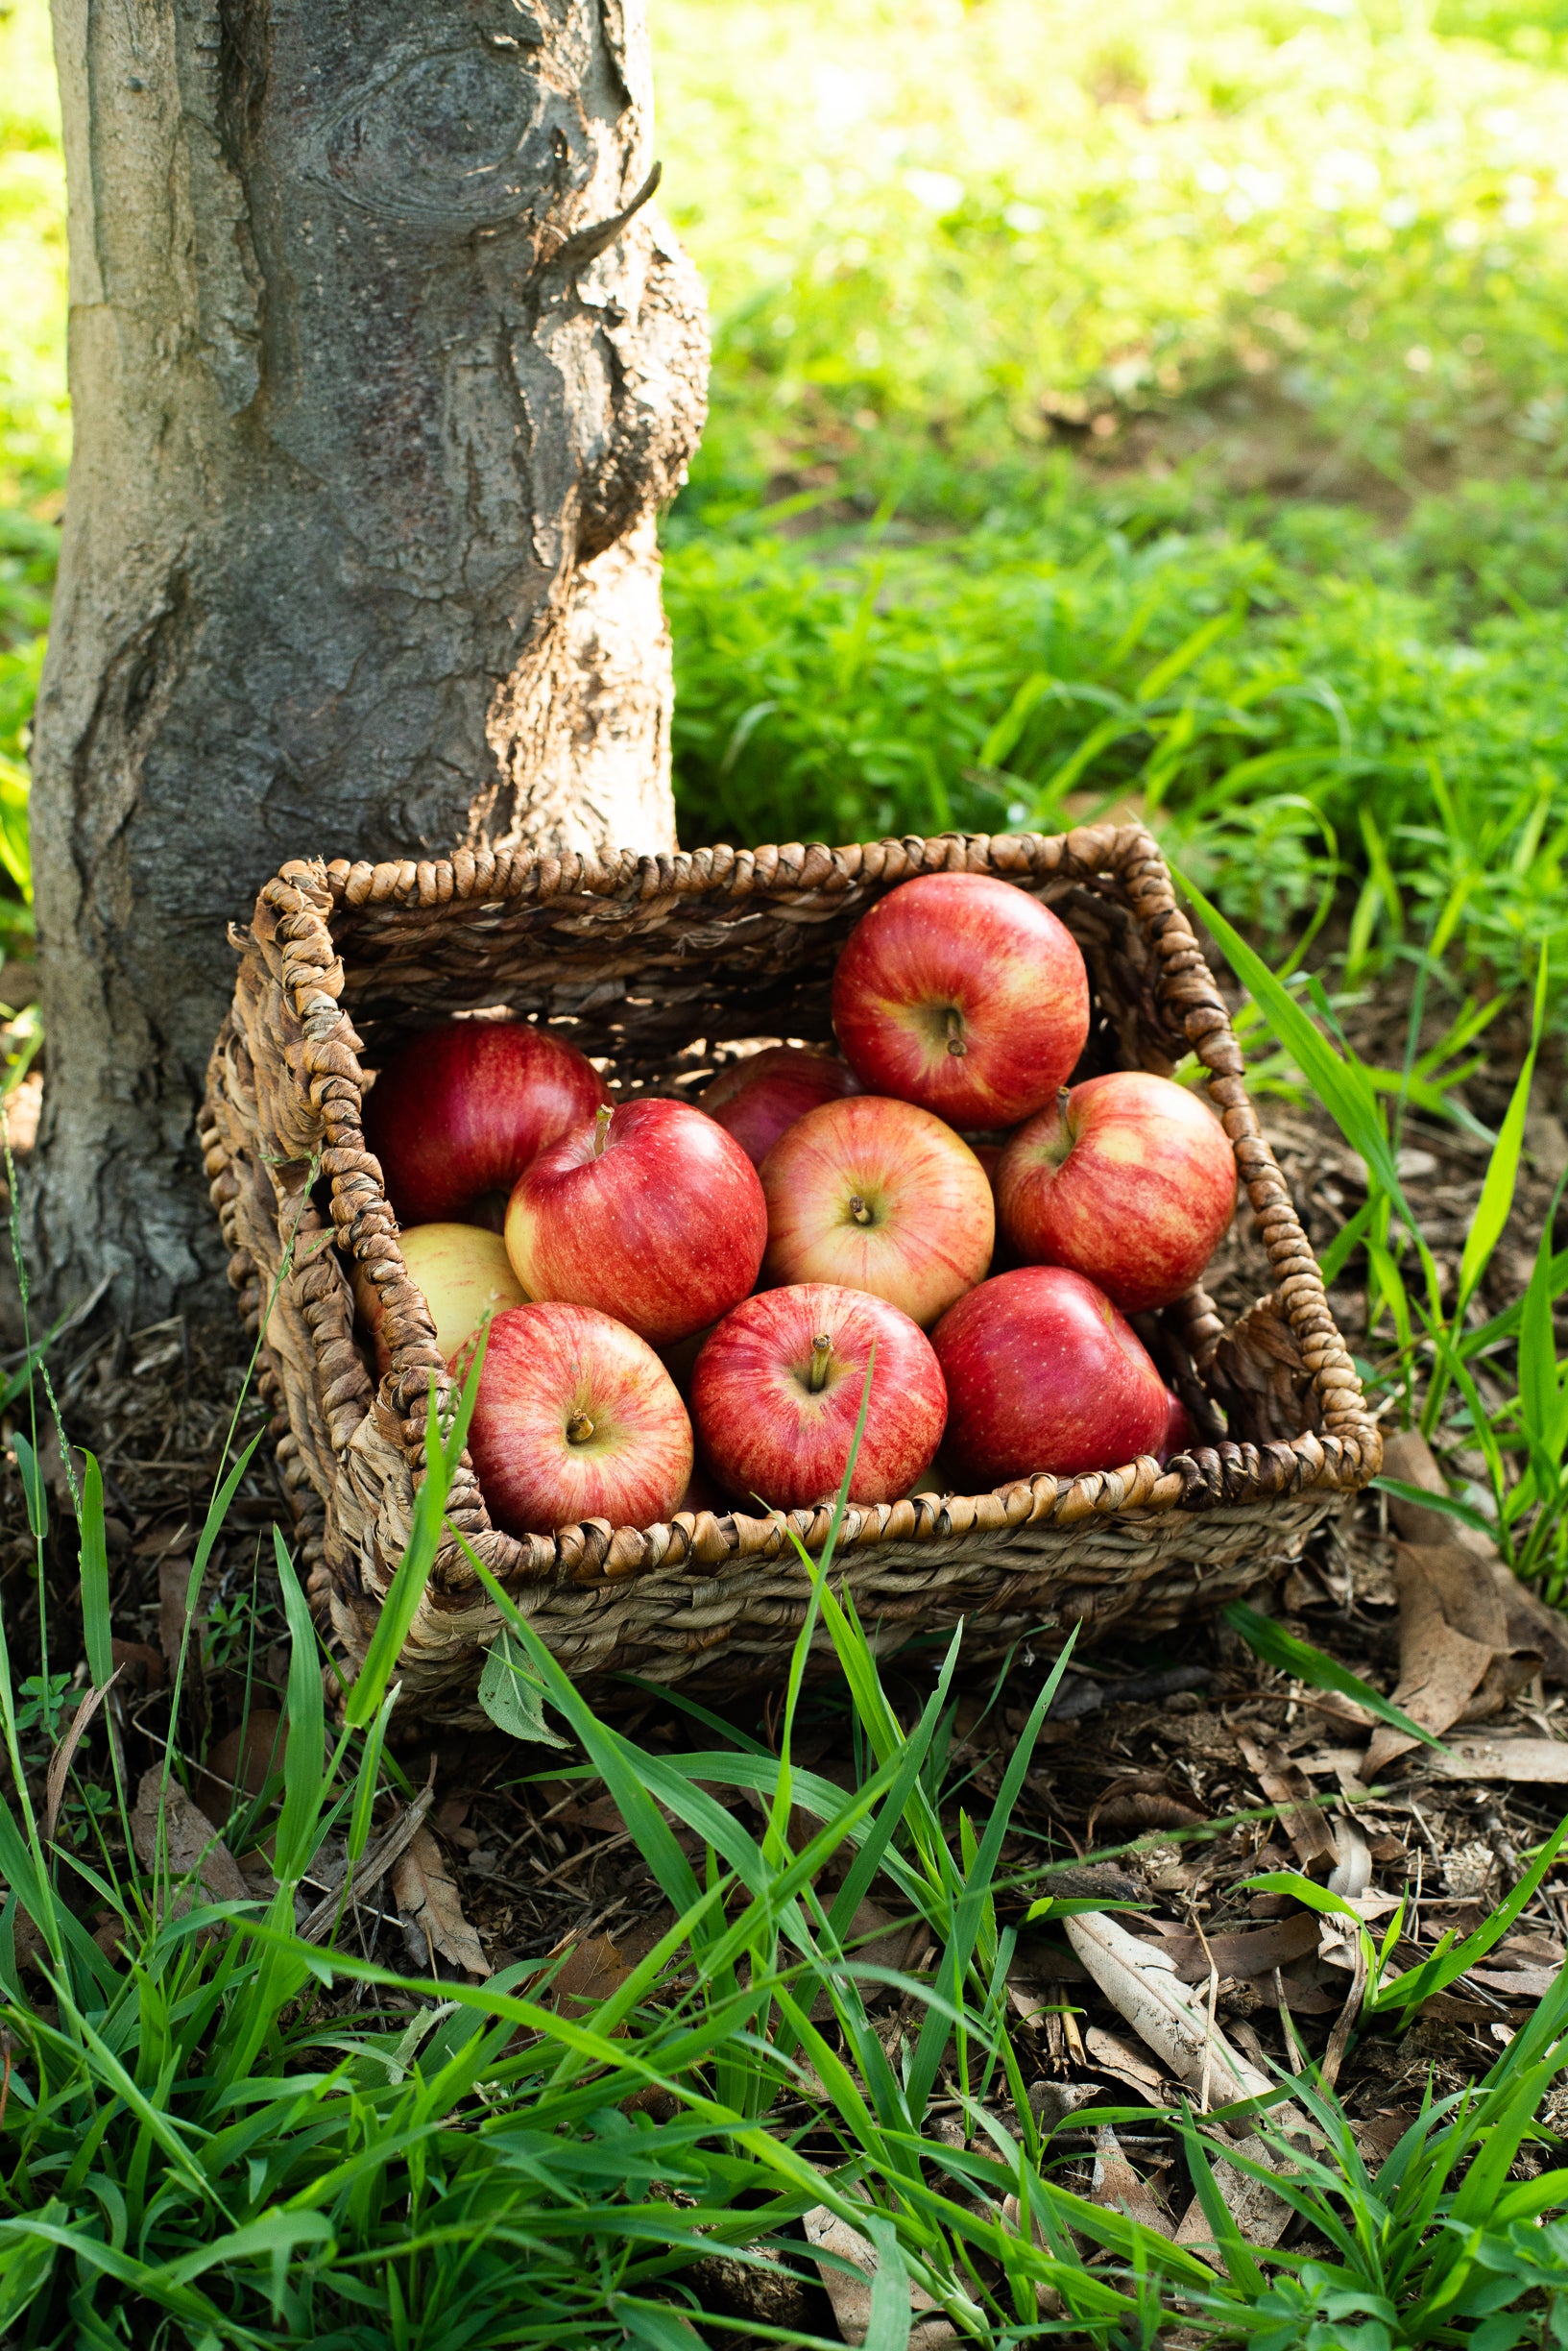 Organic Gala Apples (5 lbs.)